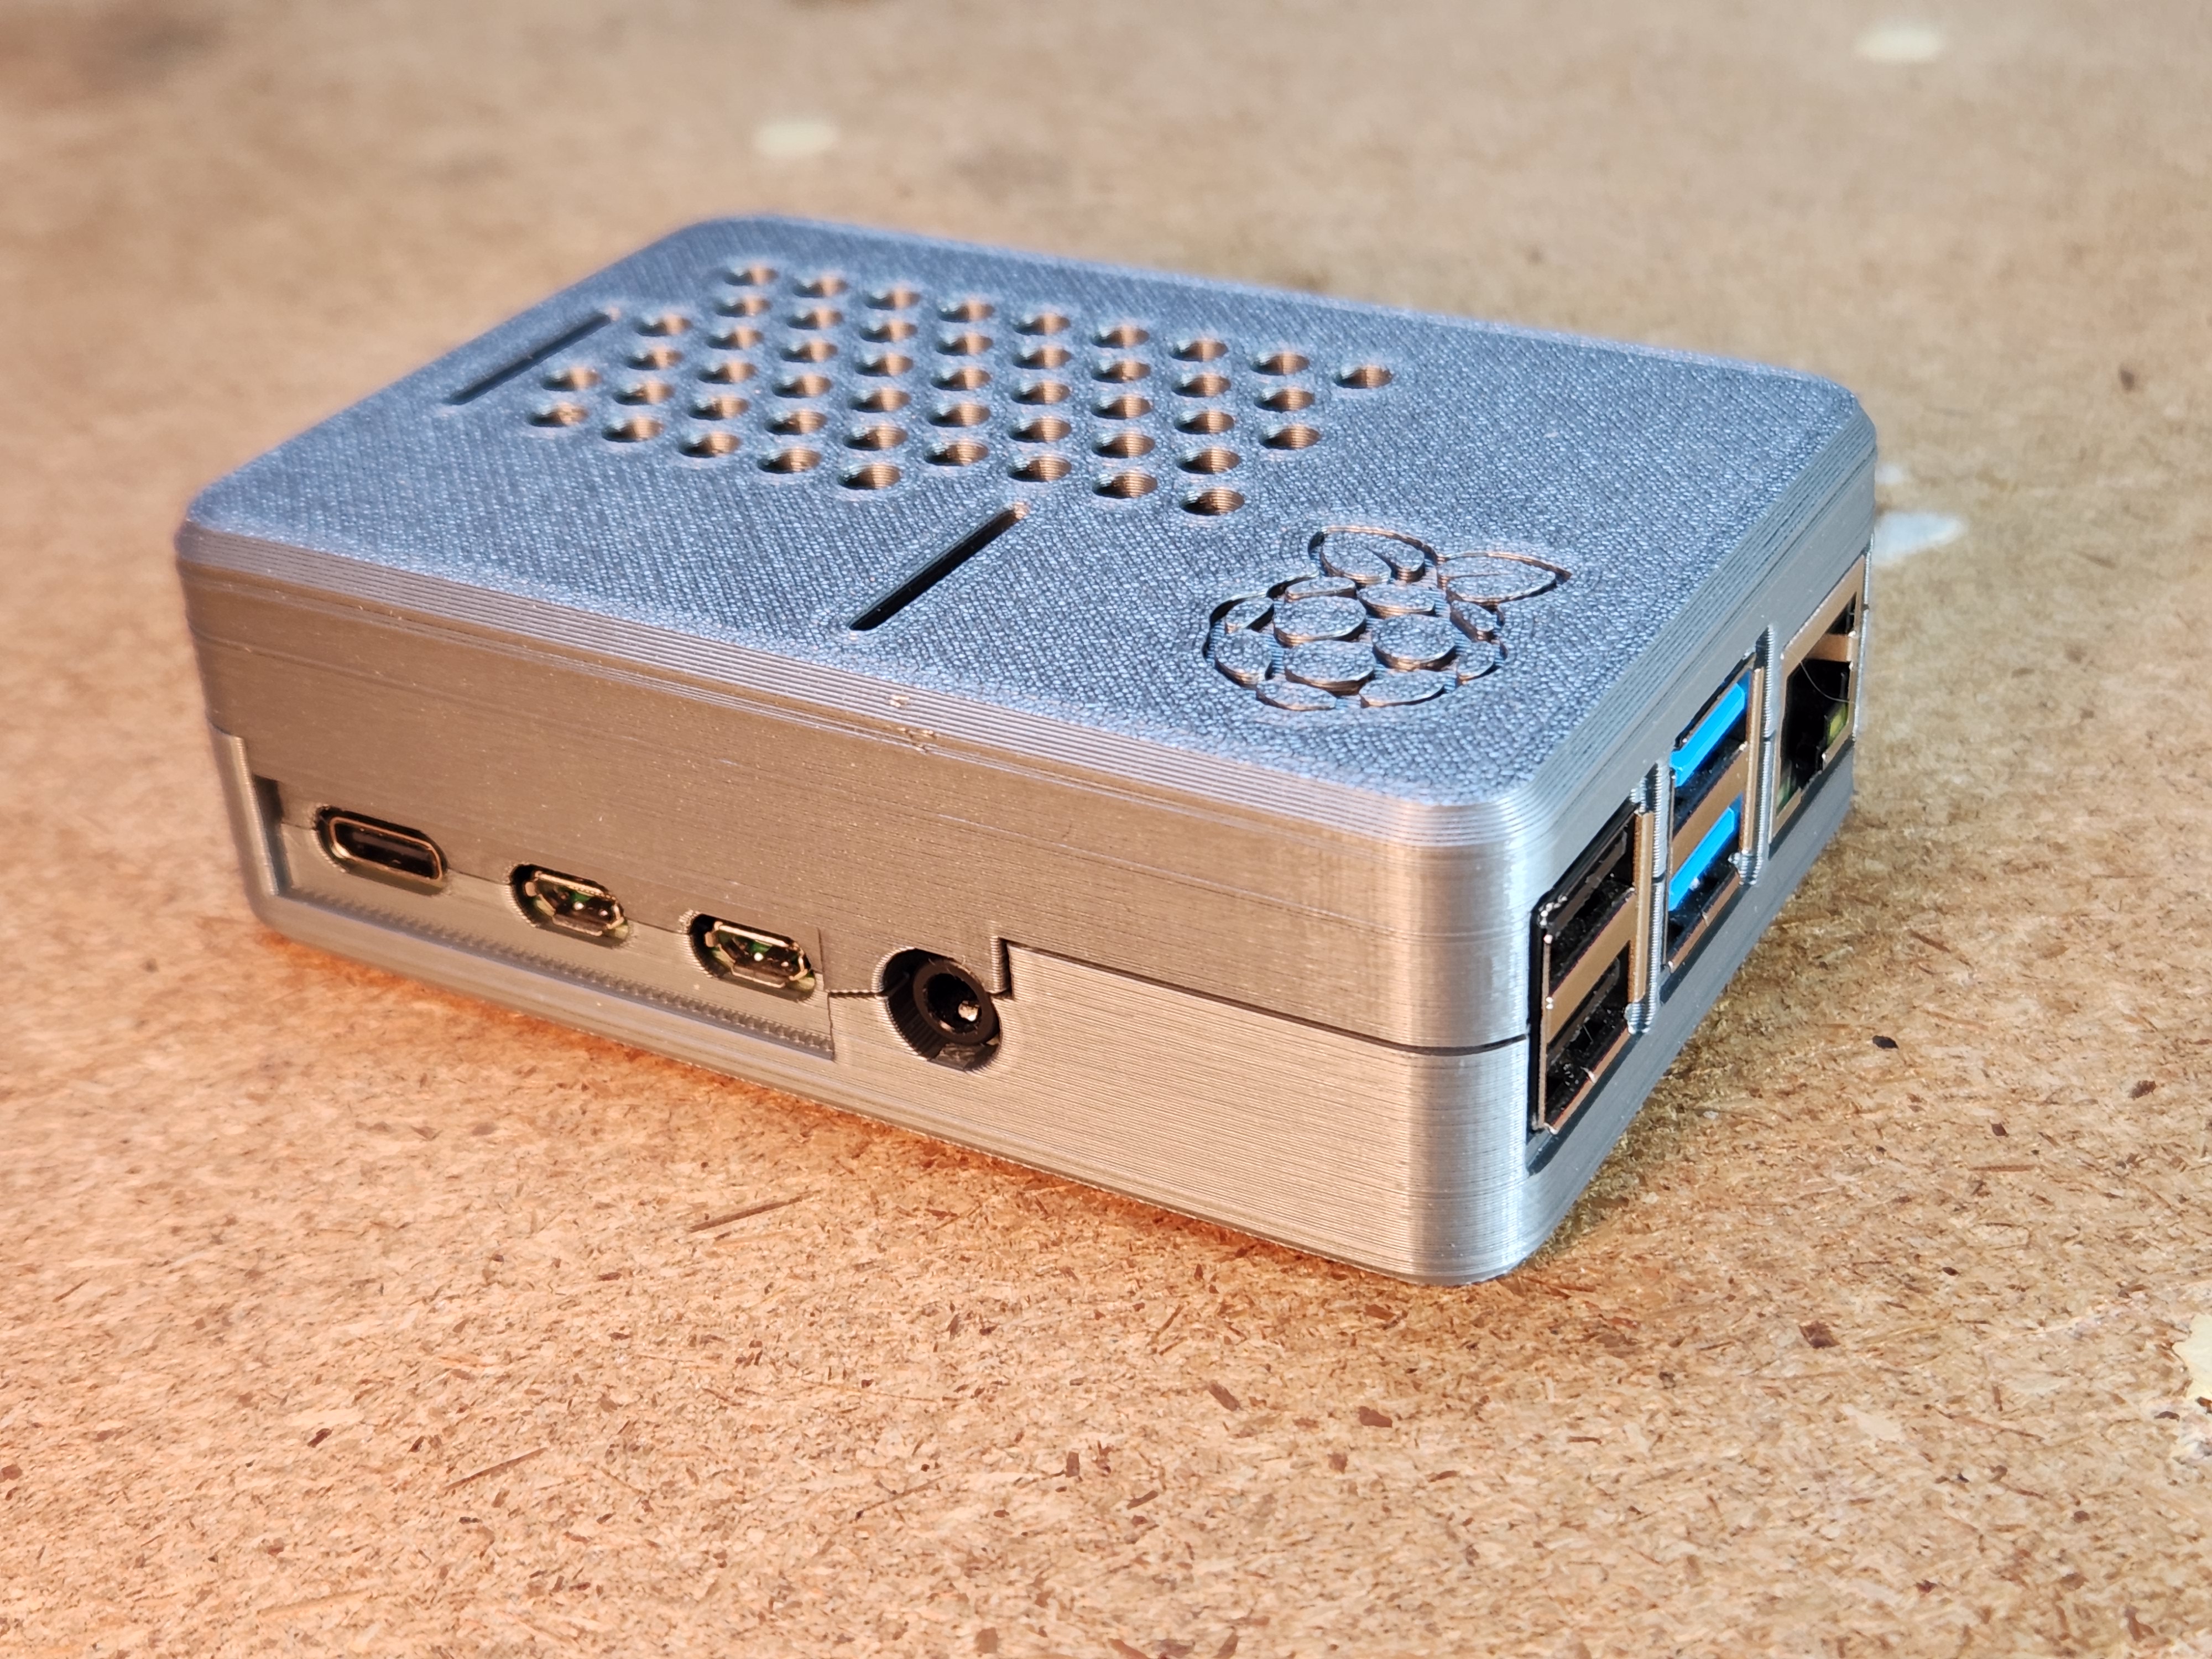 Full-featured Raspberry Pi 4 Model B case